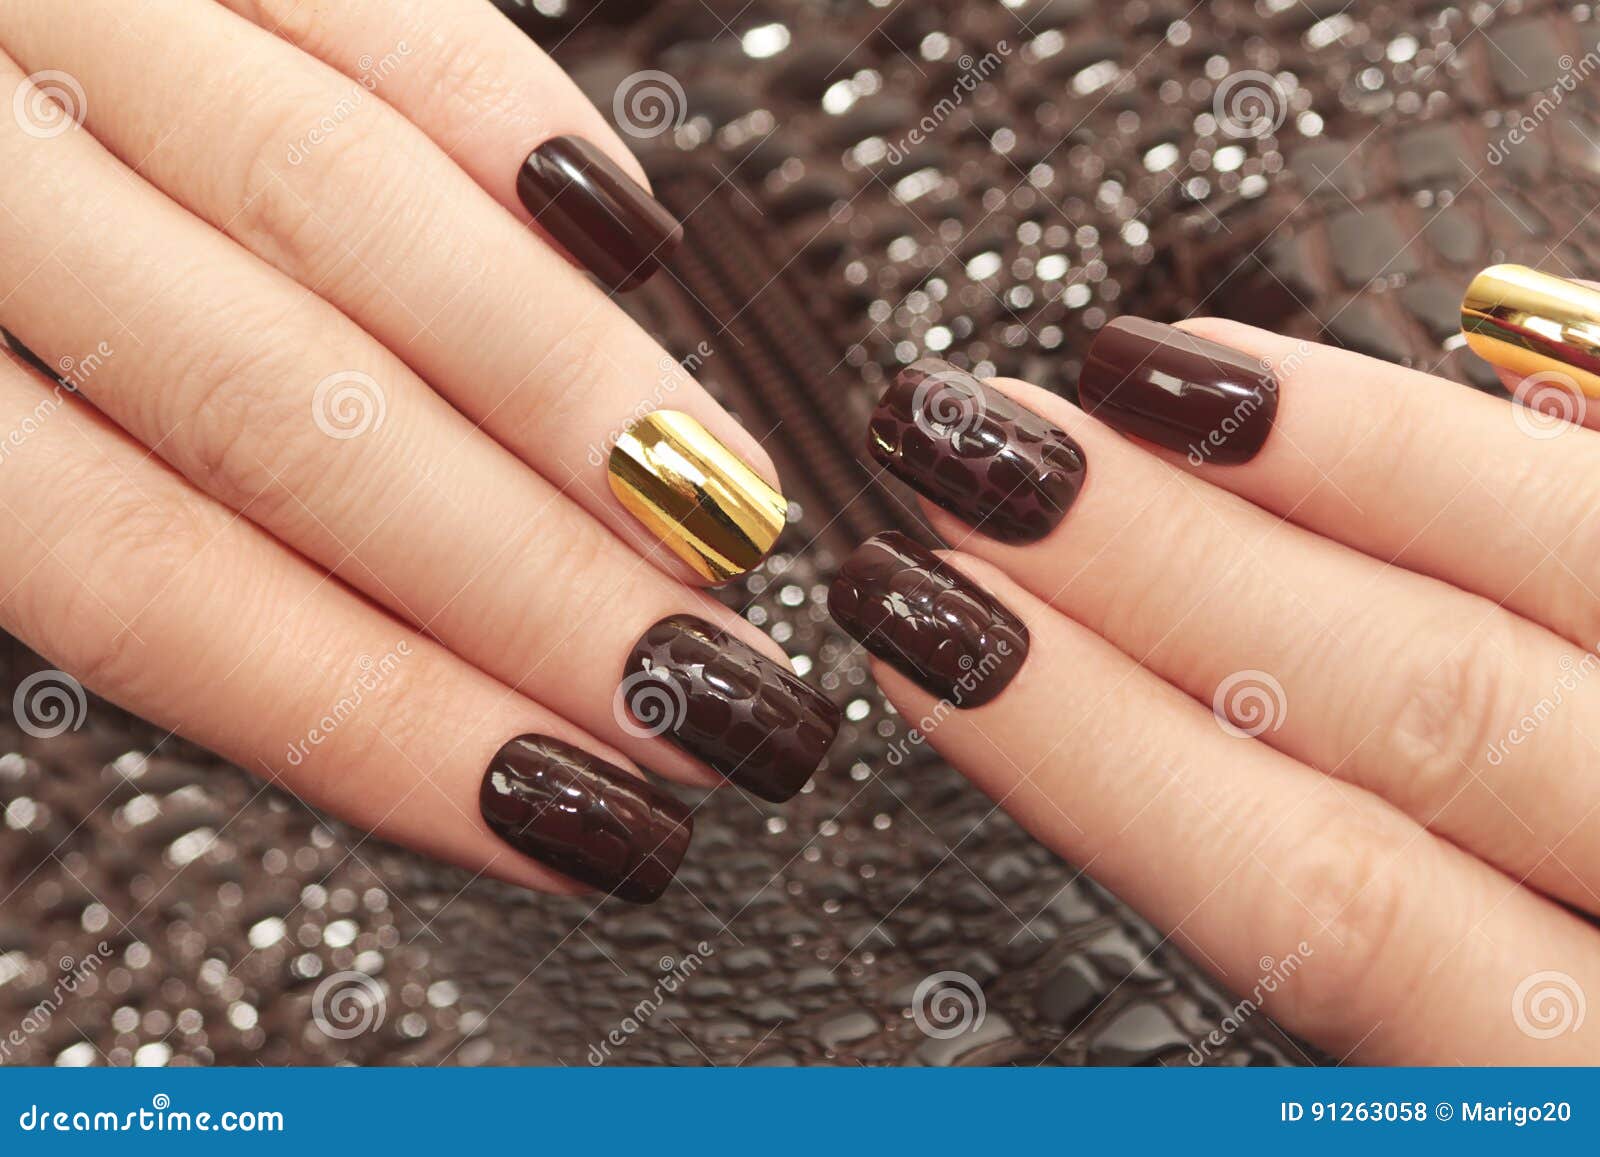 Glamorous Luxurious Brown Crocodile Manicure. Stock Photo - Image of ...